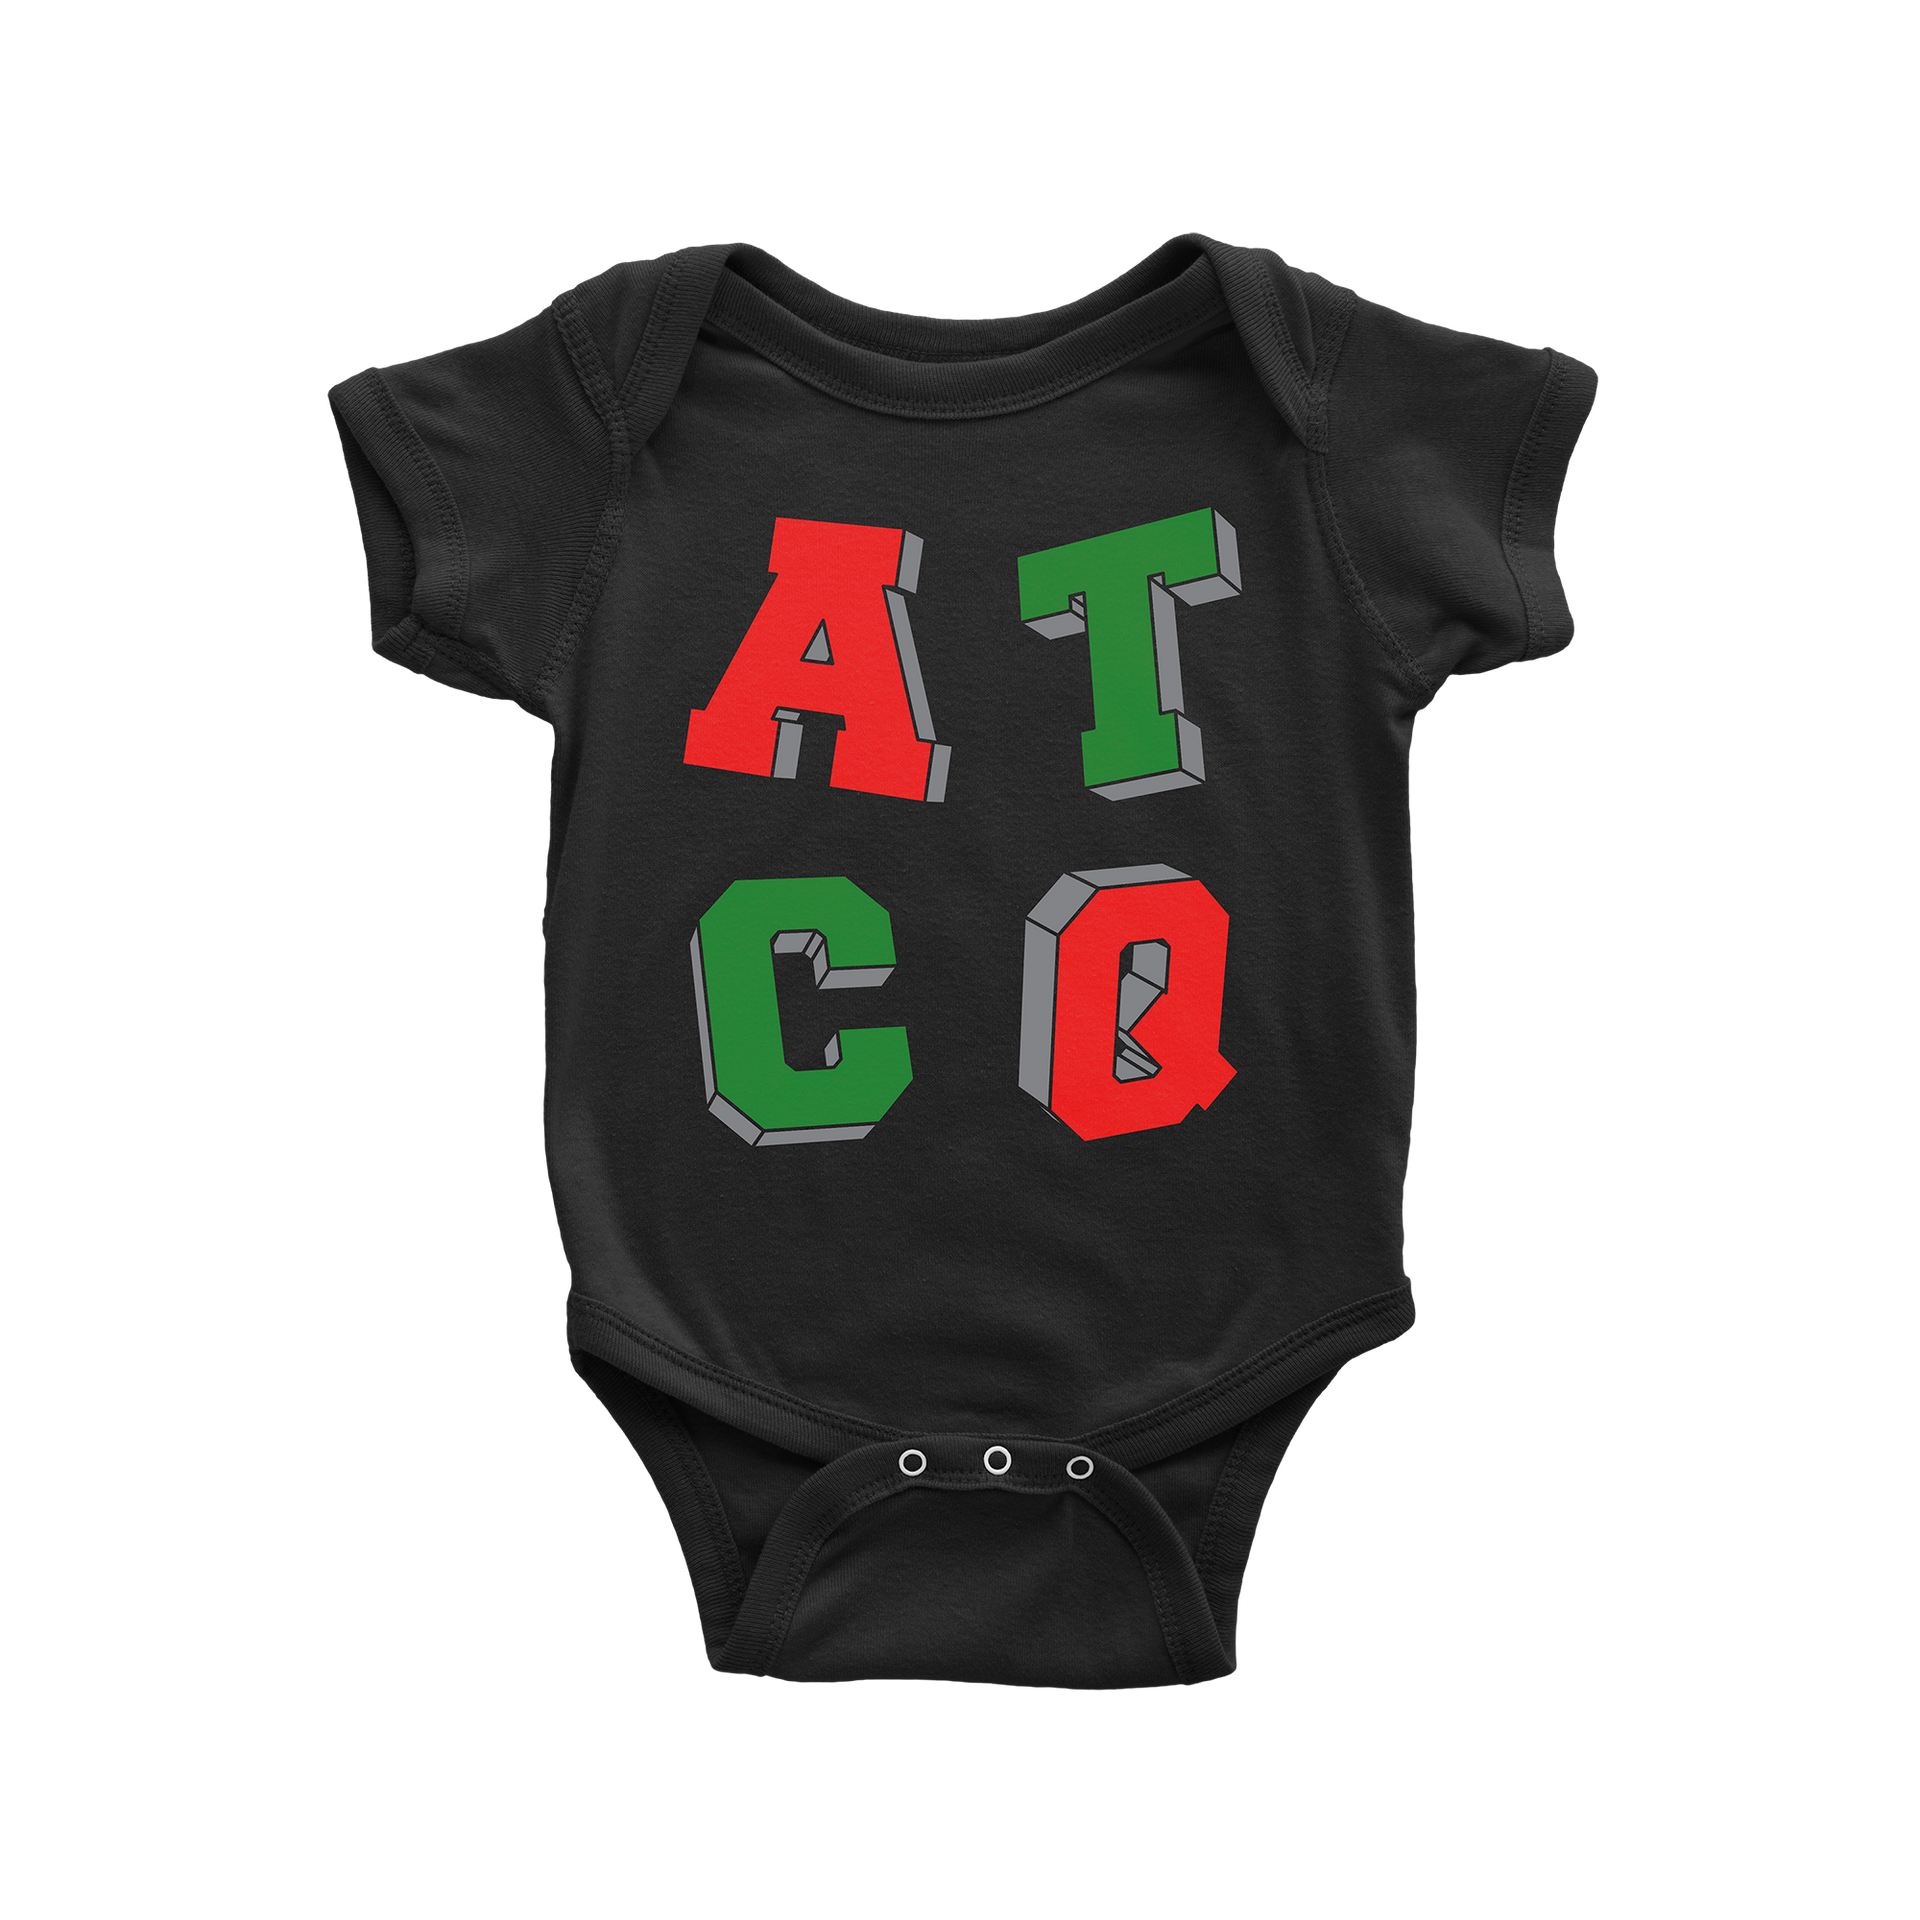 ATCQ Infant Acronym Onesie